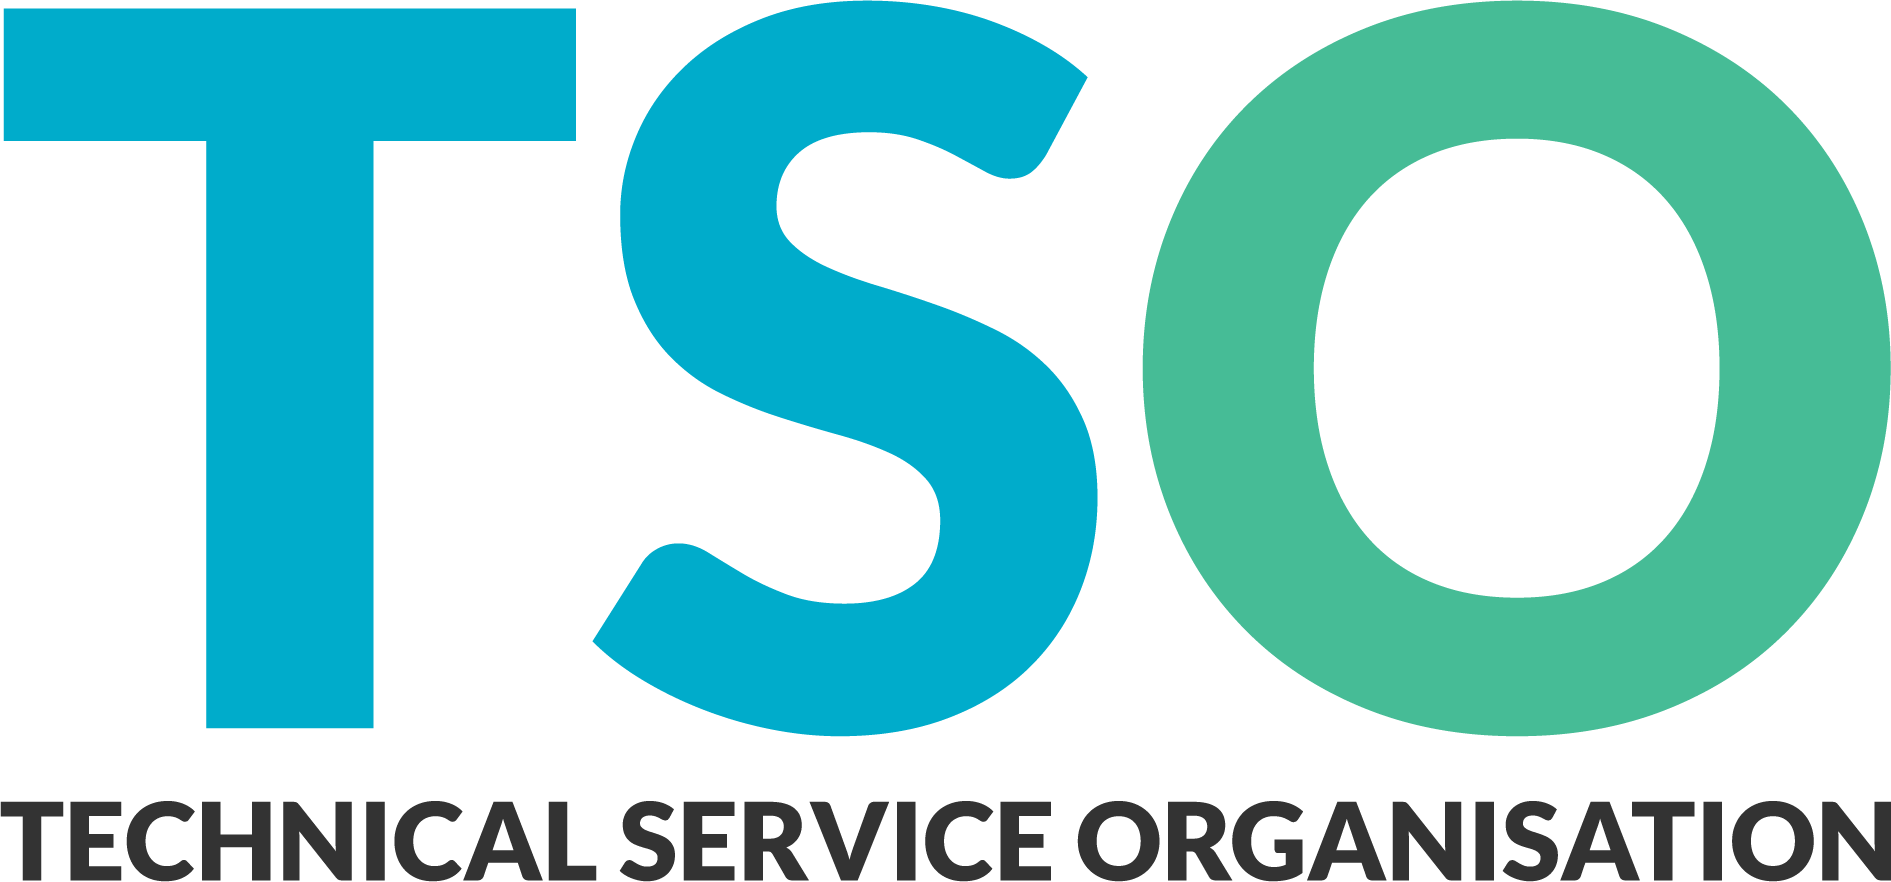 Technical Service Organisation logo